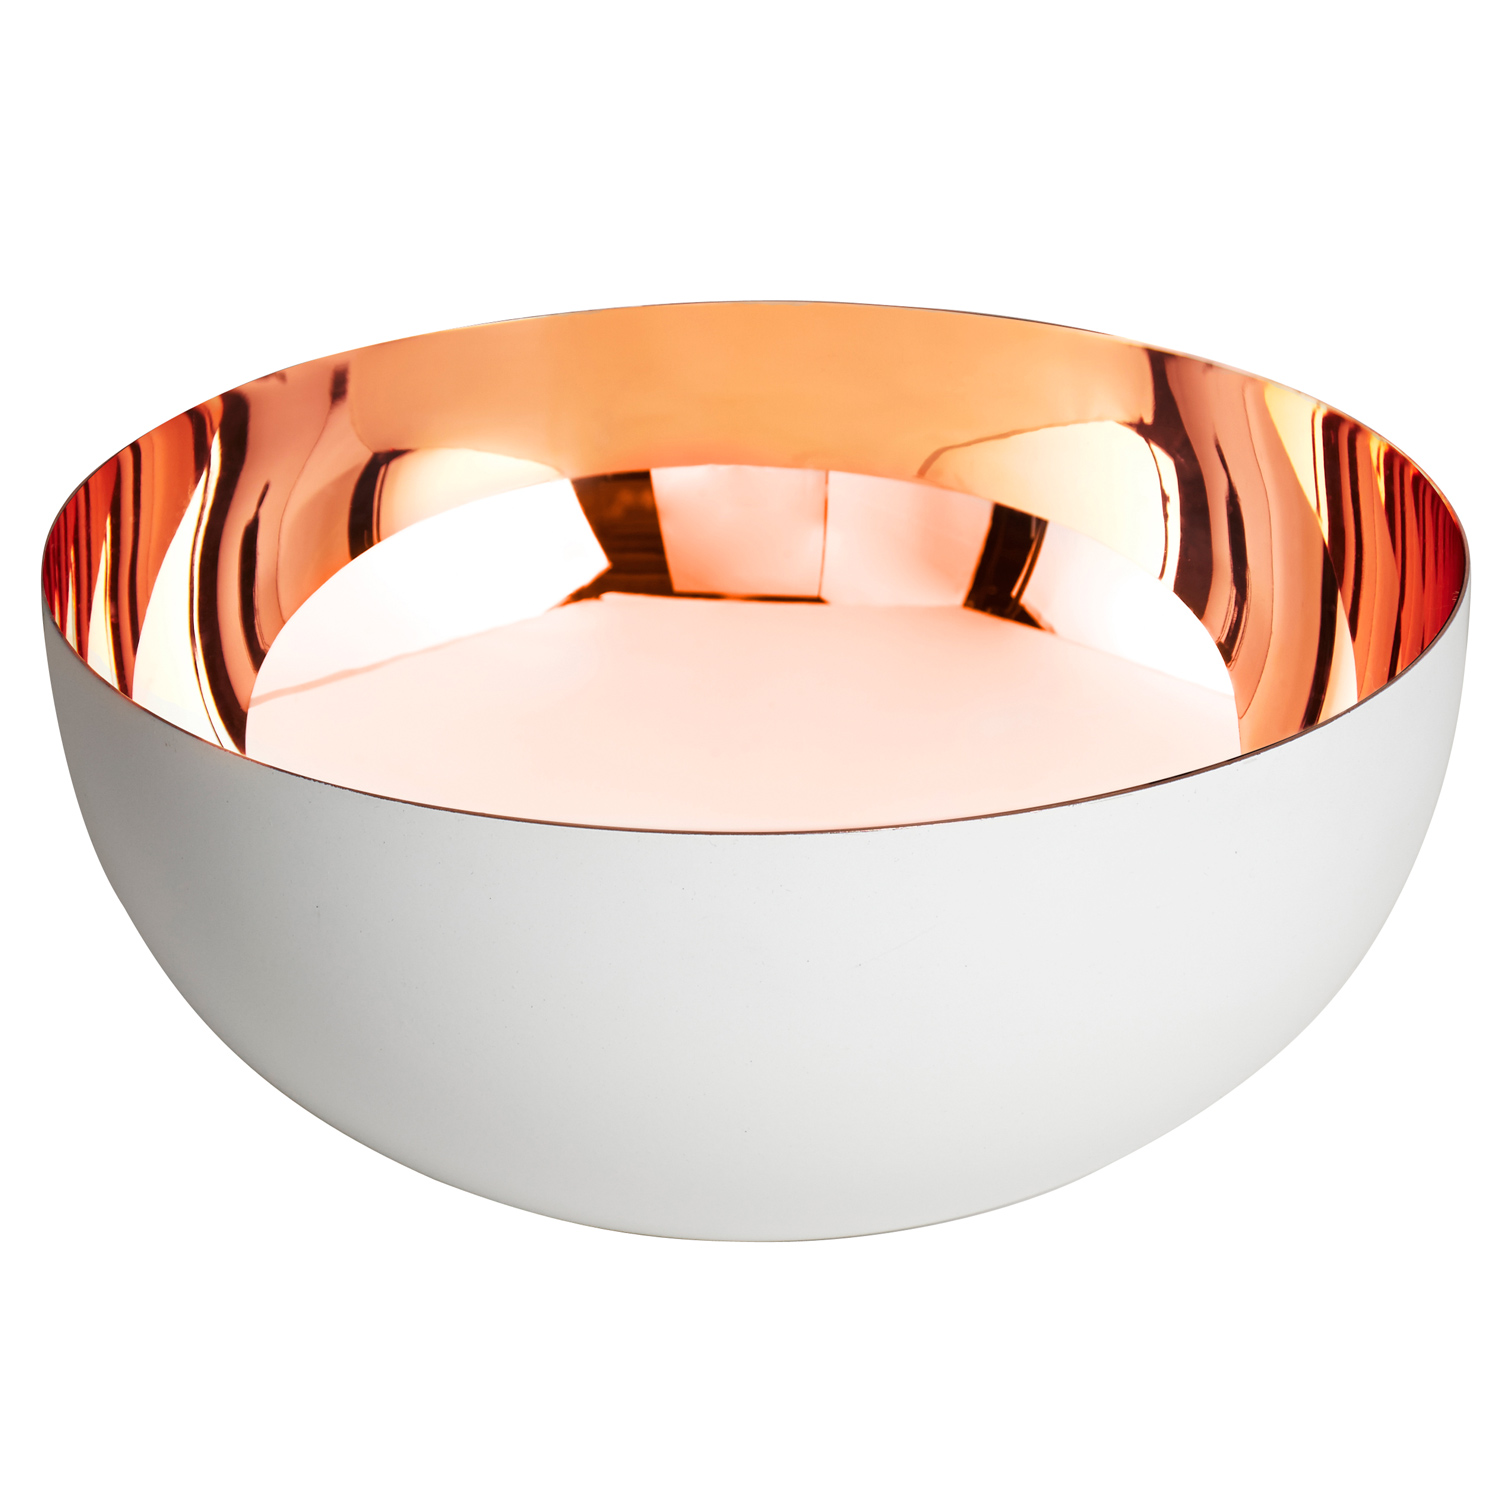 889582-white-copper-bowl-large